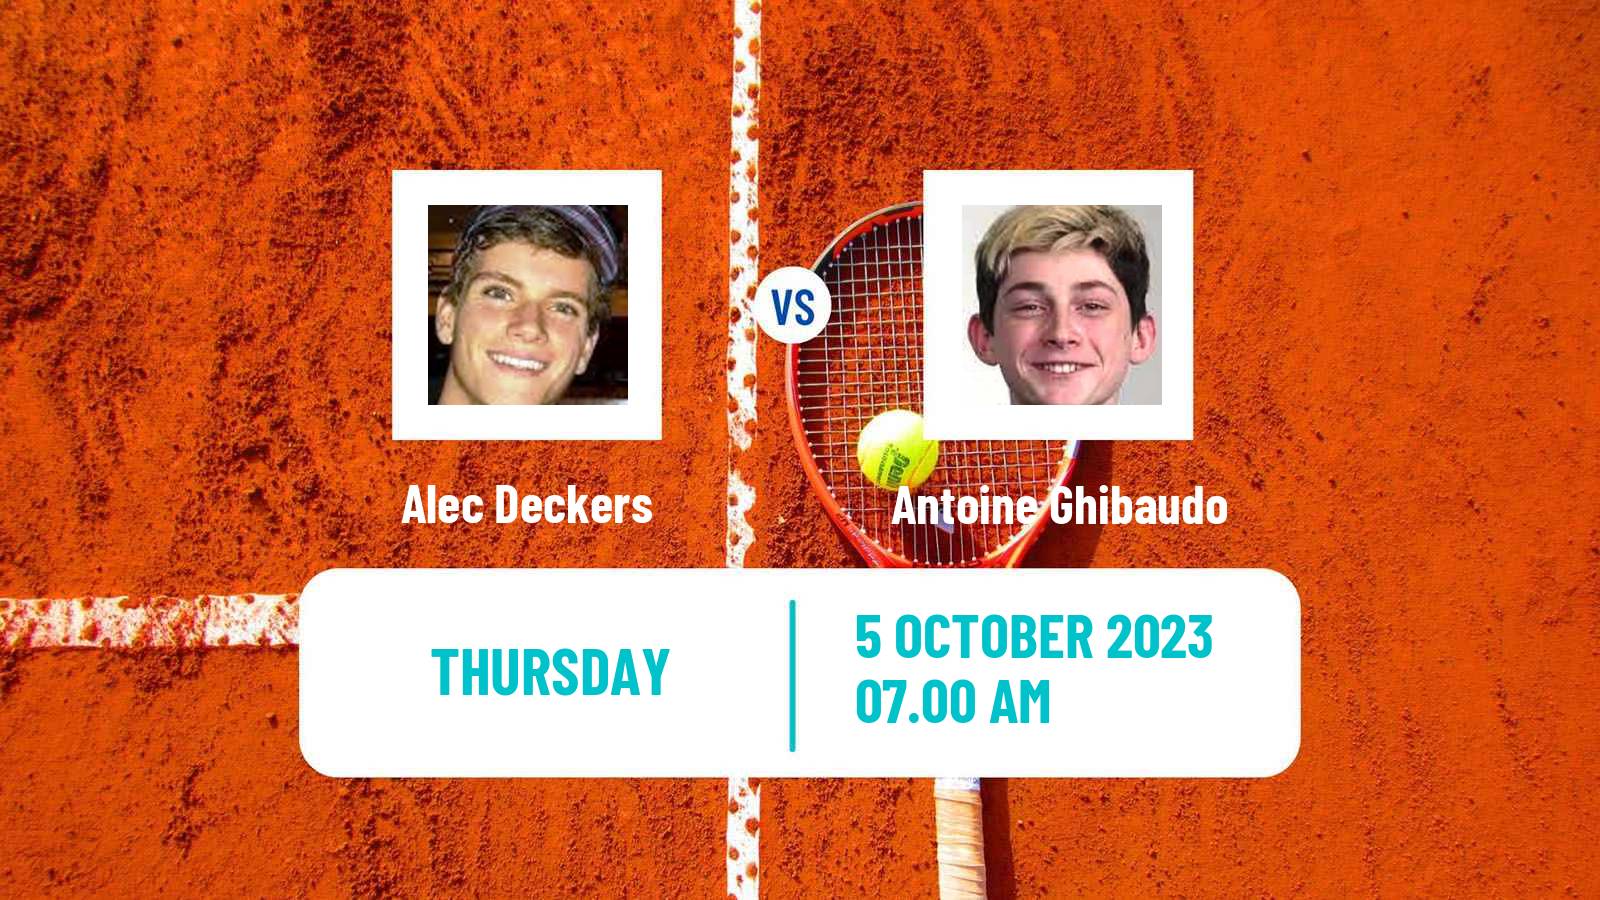 Tennis ITF M25 Nevers Men Alec Deckers - Antoine Ghibaudo